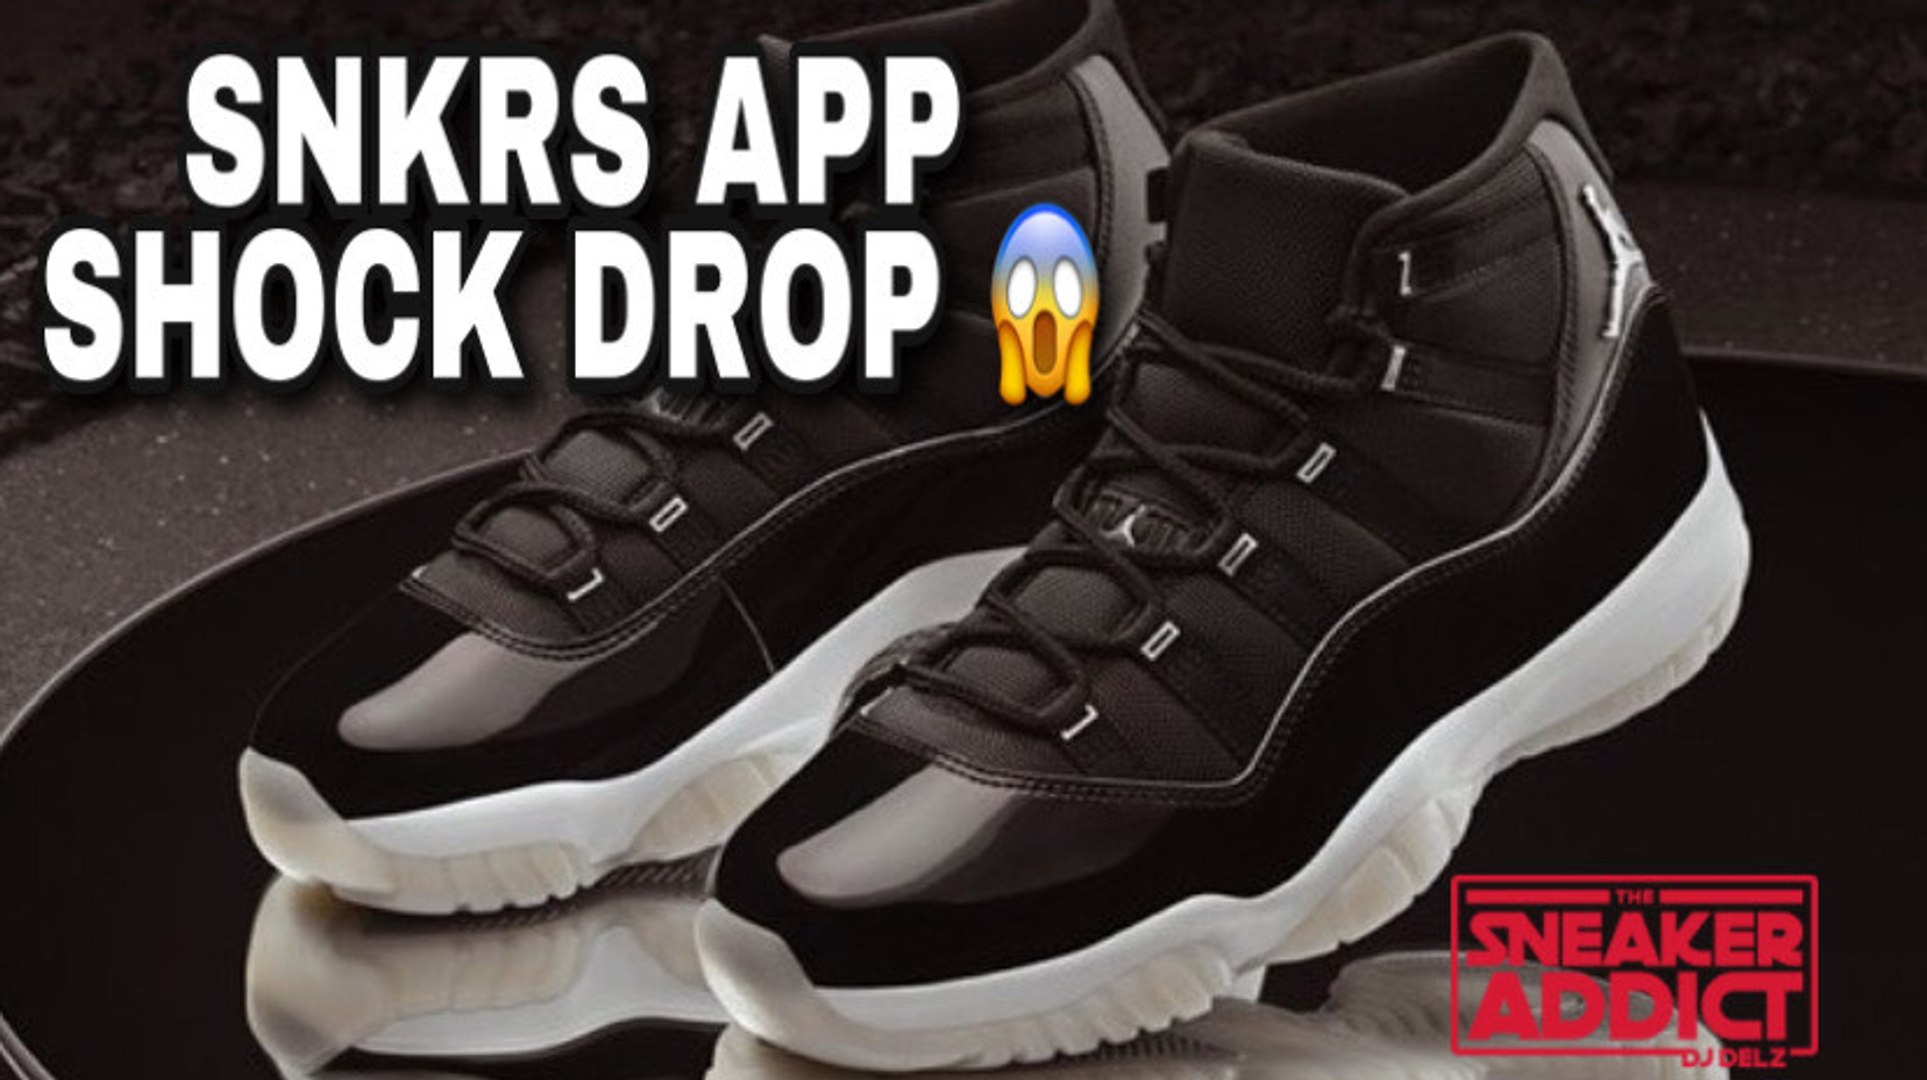 snkrs app shock drop